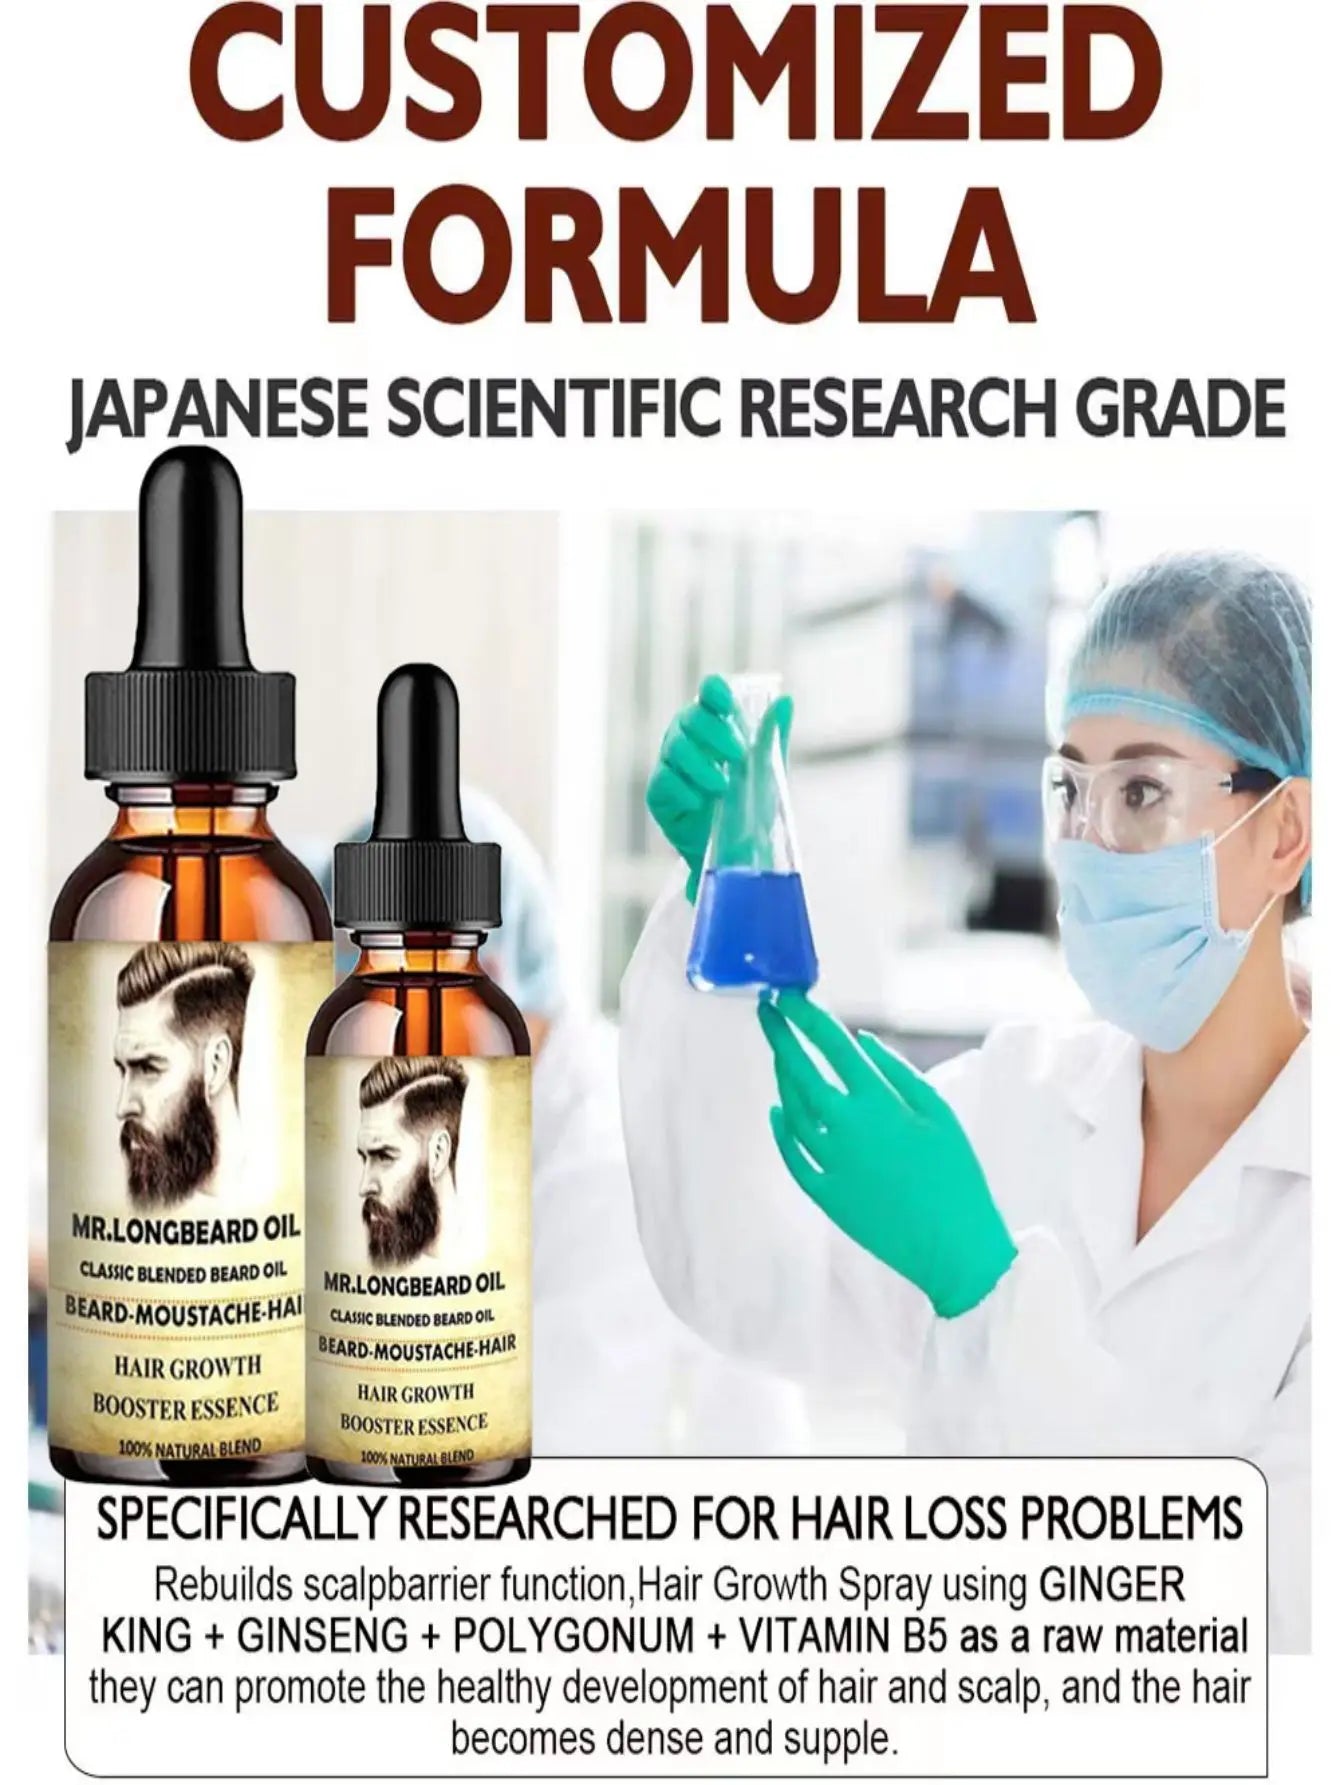 Men Beard Growth Essential Oil for Men Growth Tool Hair Laser Beard Growth Head Hair Care Professional Brazilian Keratin